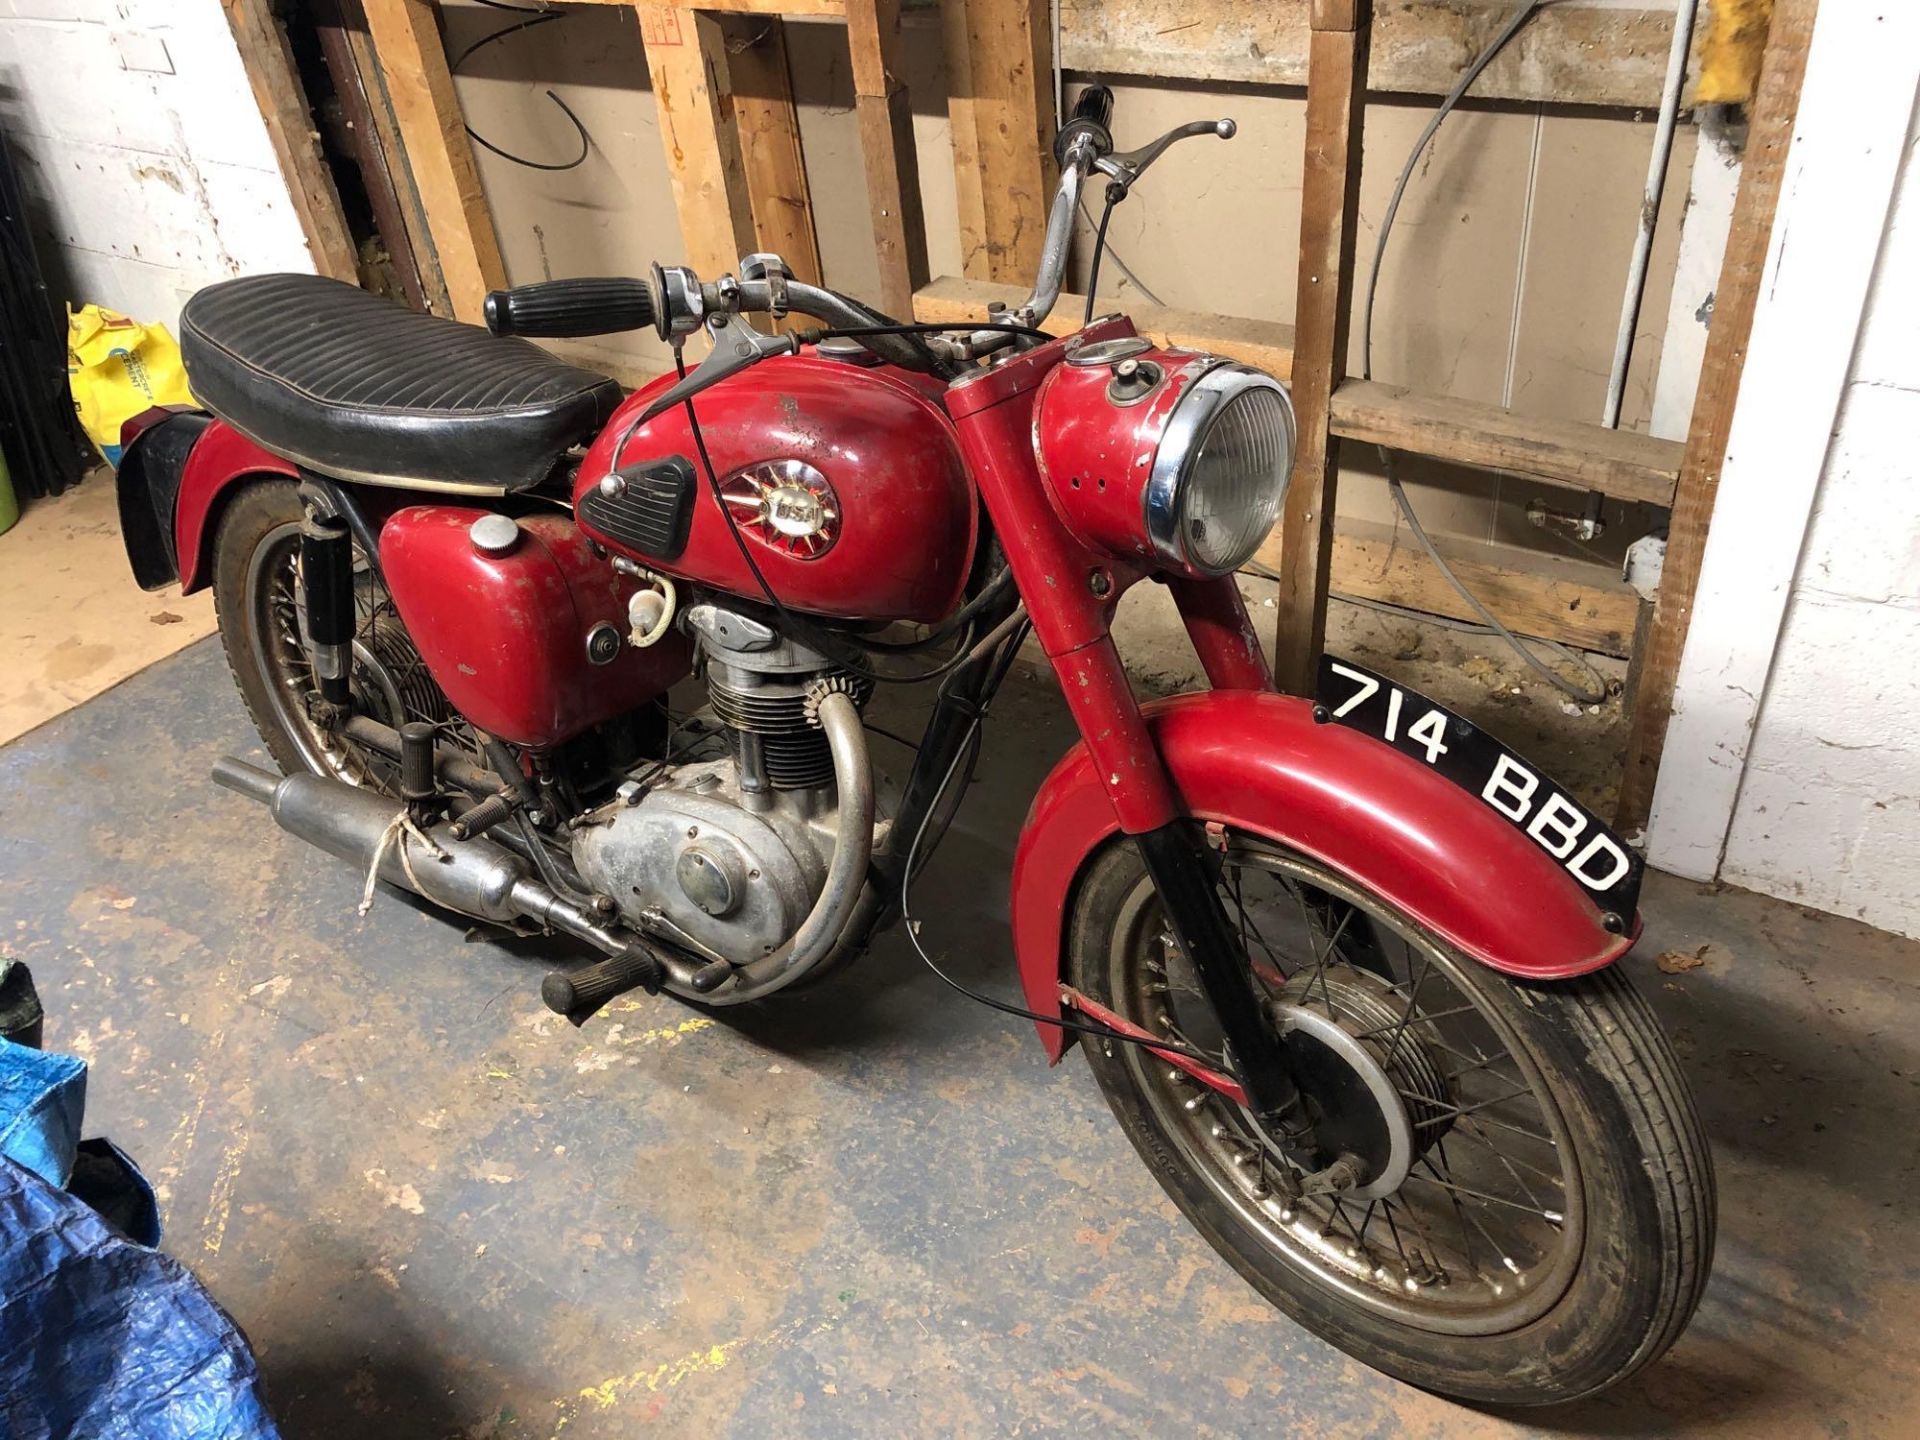 1962 BSA C15 250cc motorbike. Reg No: 714 BBD. Serial No: C15 29929. Mileage: 5,799 (showing). NB: N